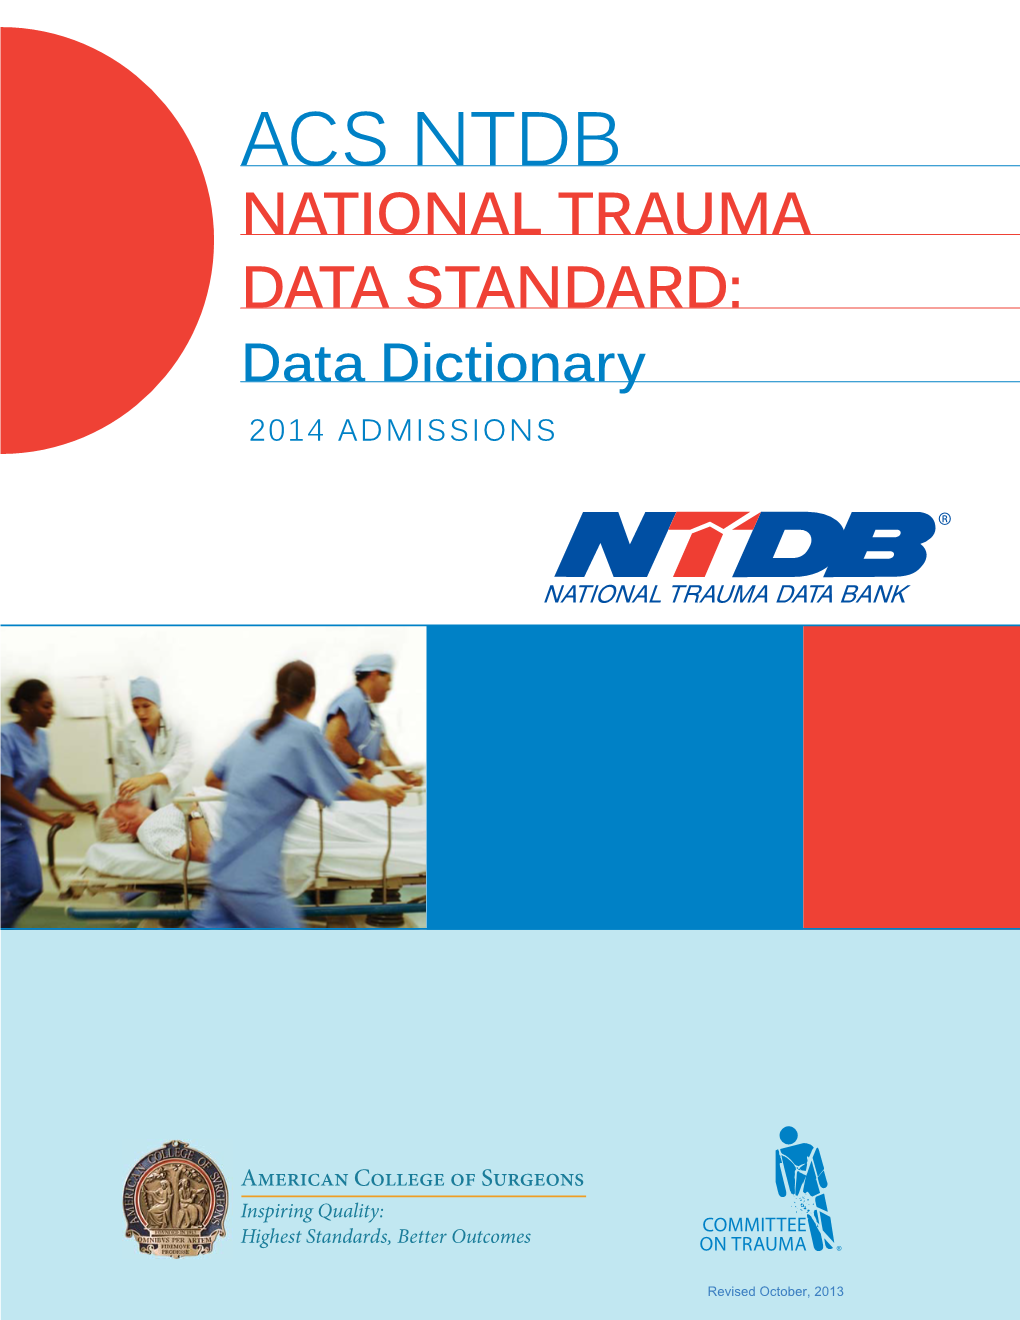 ACS NTDB NATIONAL TRAUMA DATA STANDARD Data Dictionary 201 ADMISSIONS